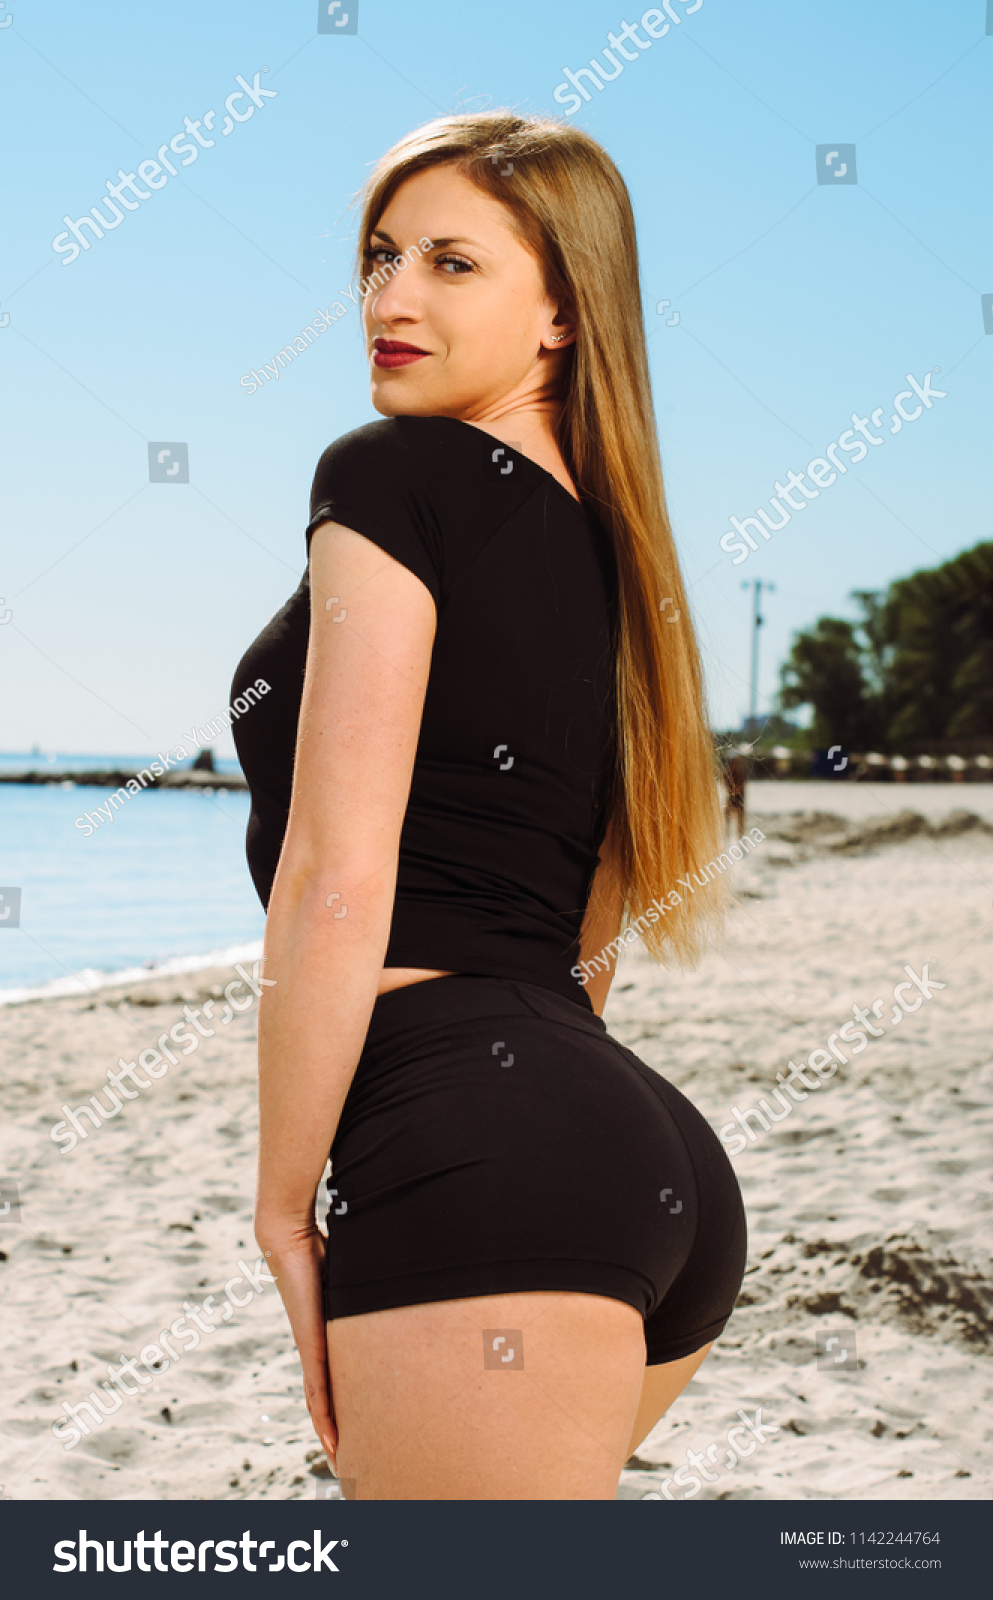 Girl With Beautiful Ass